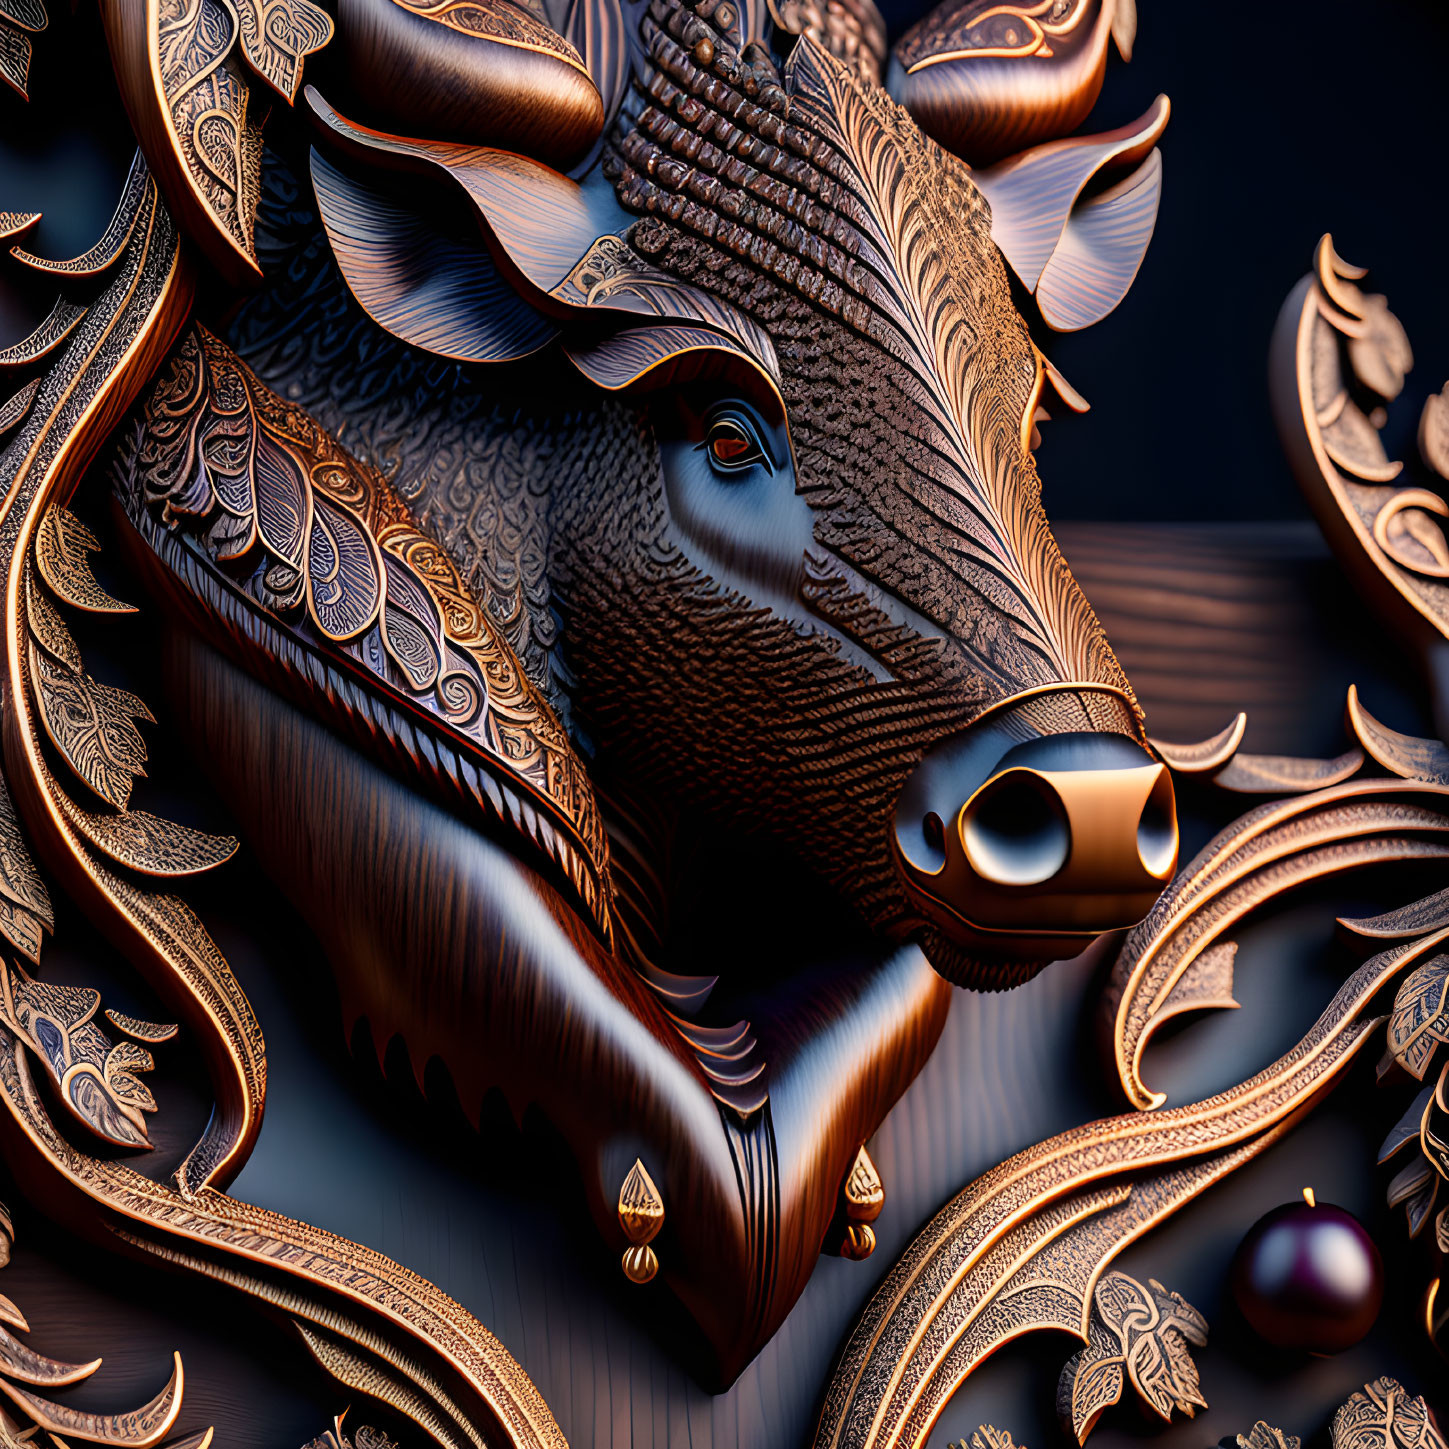 Intricate digital art: stylized bull's head with metallic textures on dark background